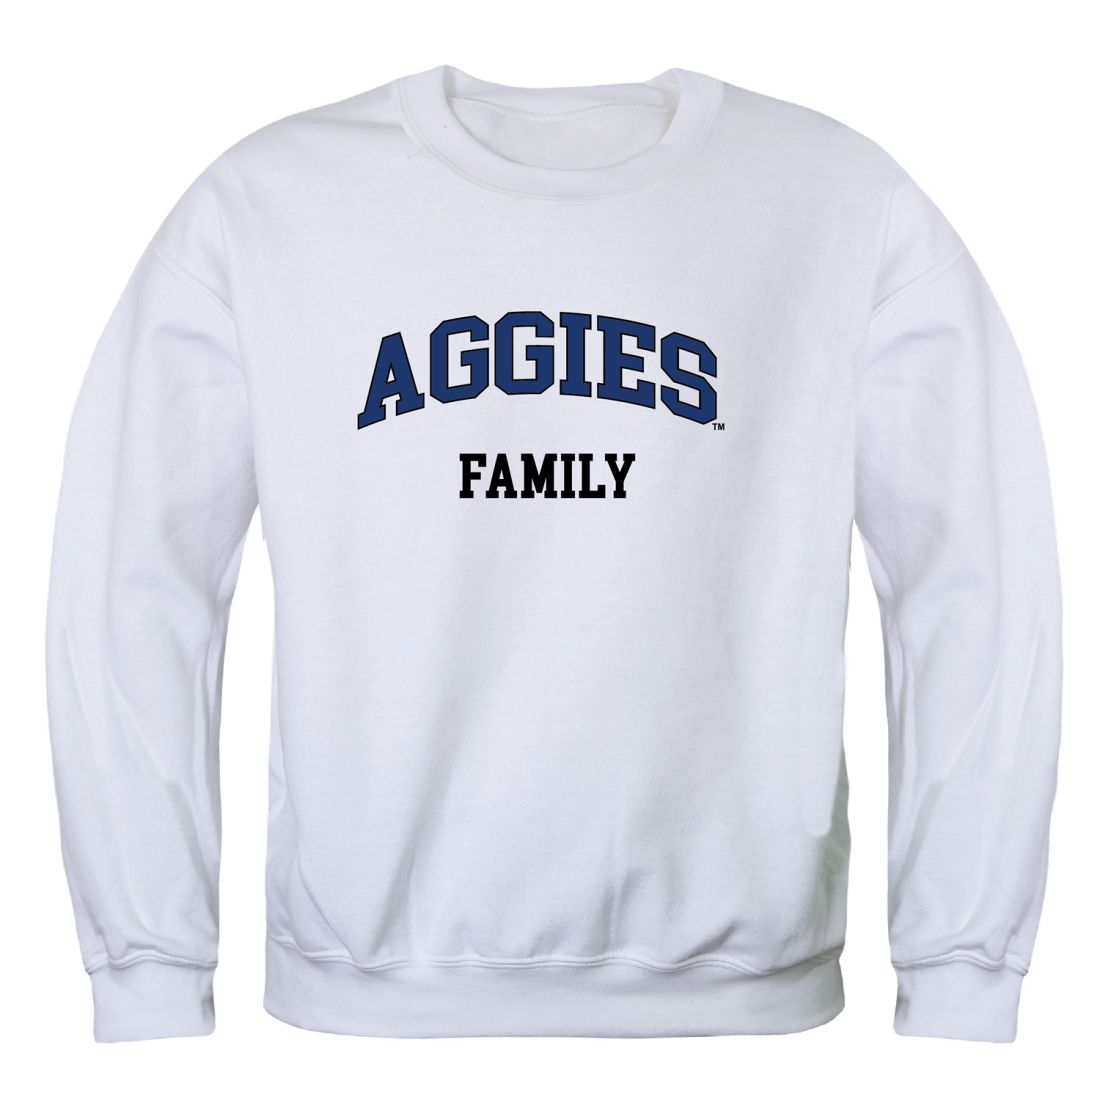 North-Carolina-A&T-State-University-Aggies-Family-Fleece-Crewneck-Pullover-Sweatshirt